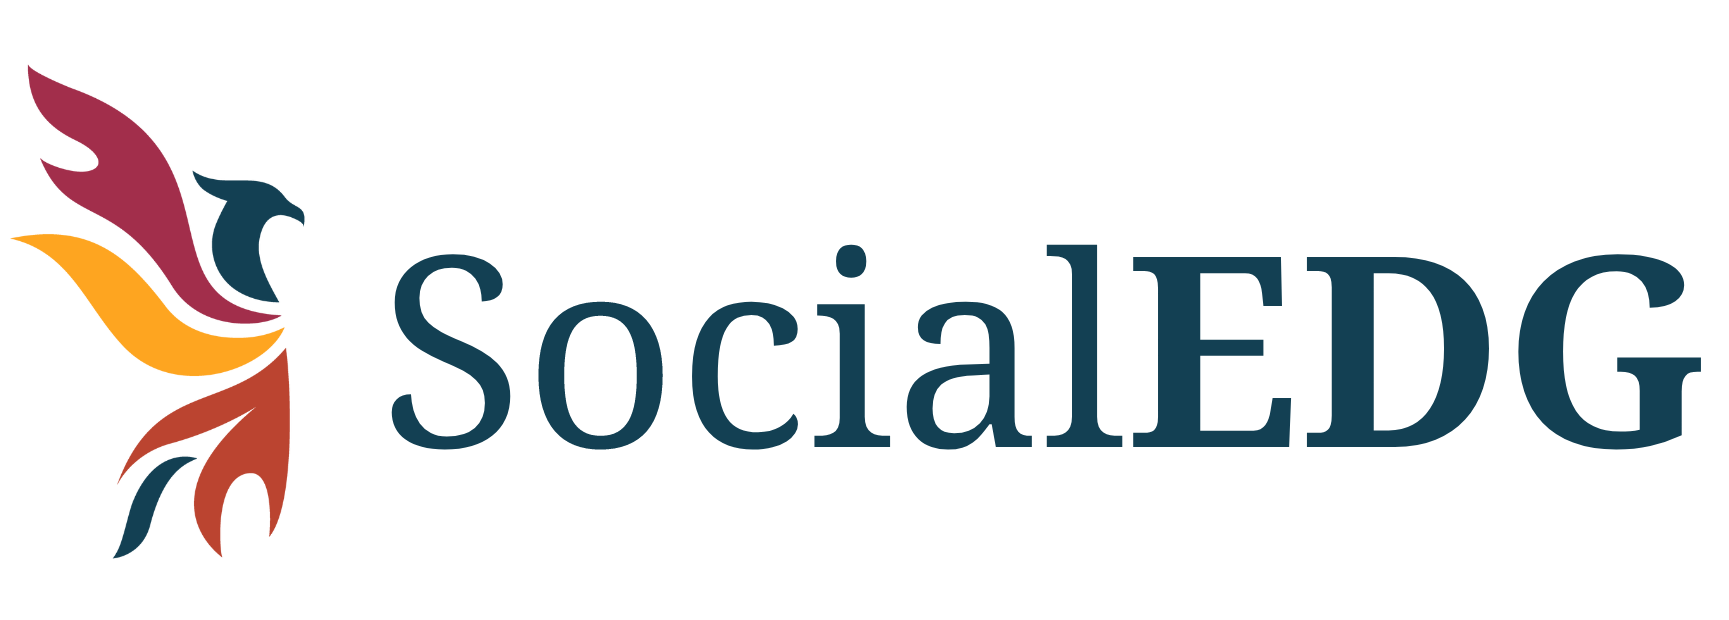 socialedg logo